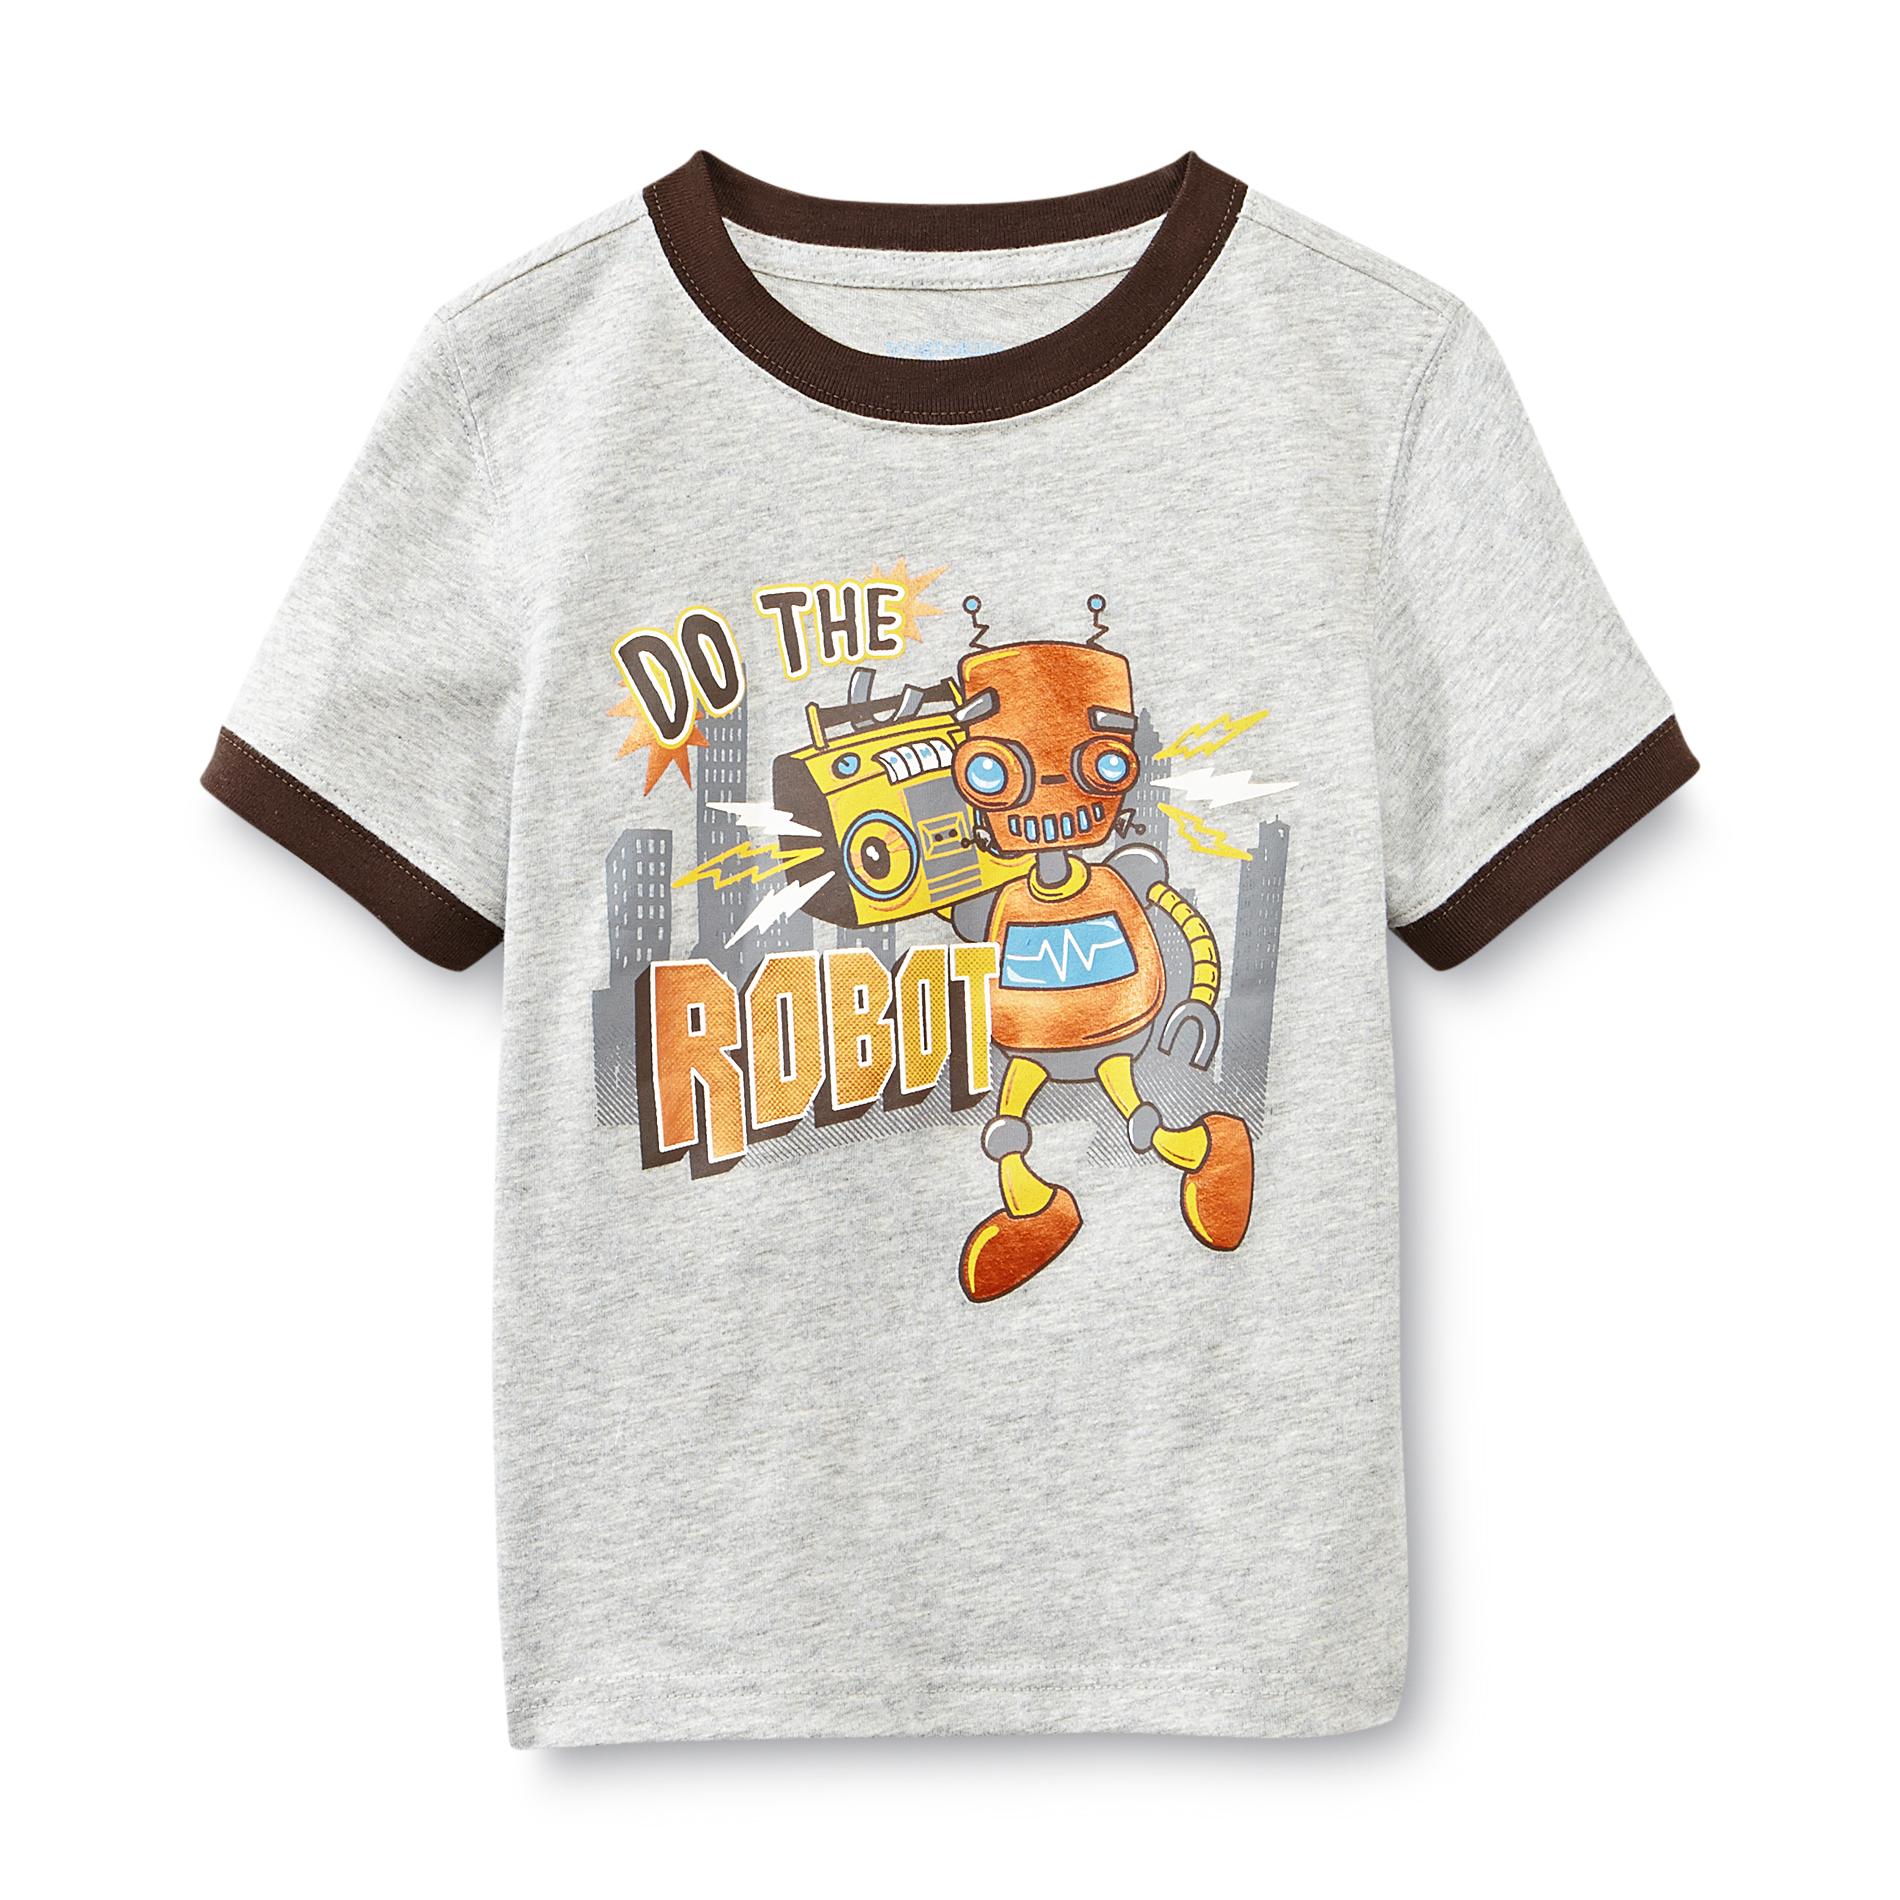 Toughskins Infant & Toddler Boy's Graphic T-Shirt - Do The Robot